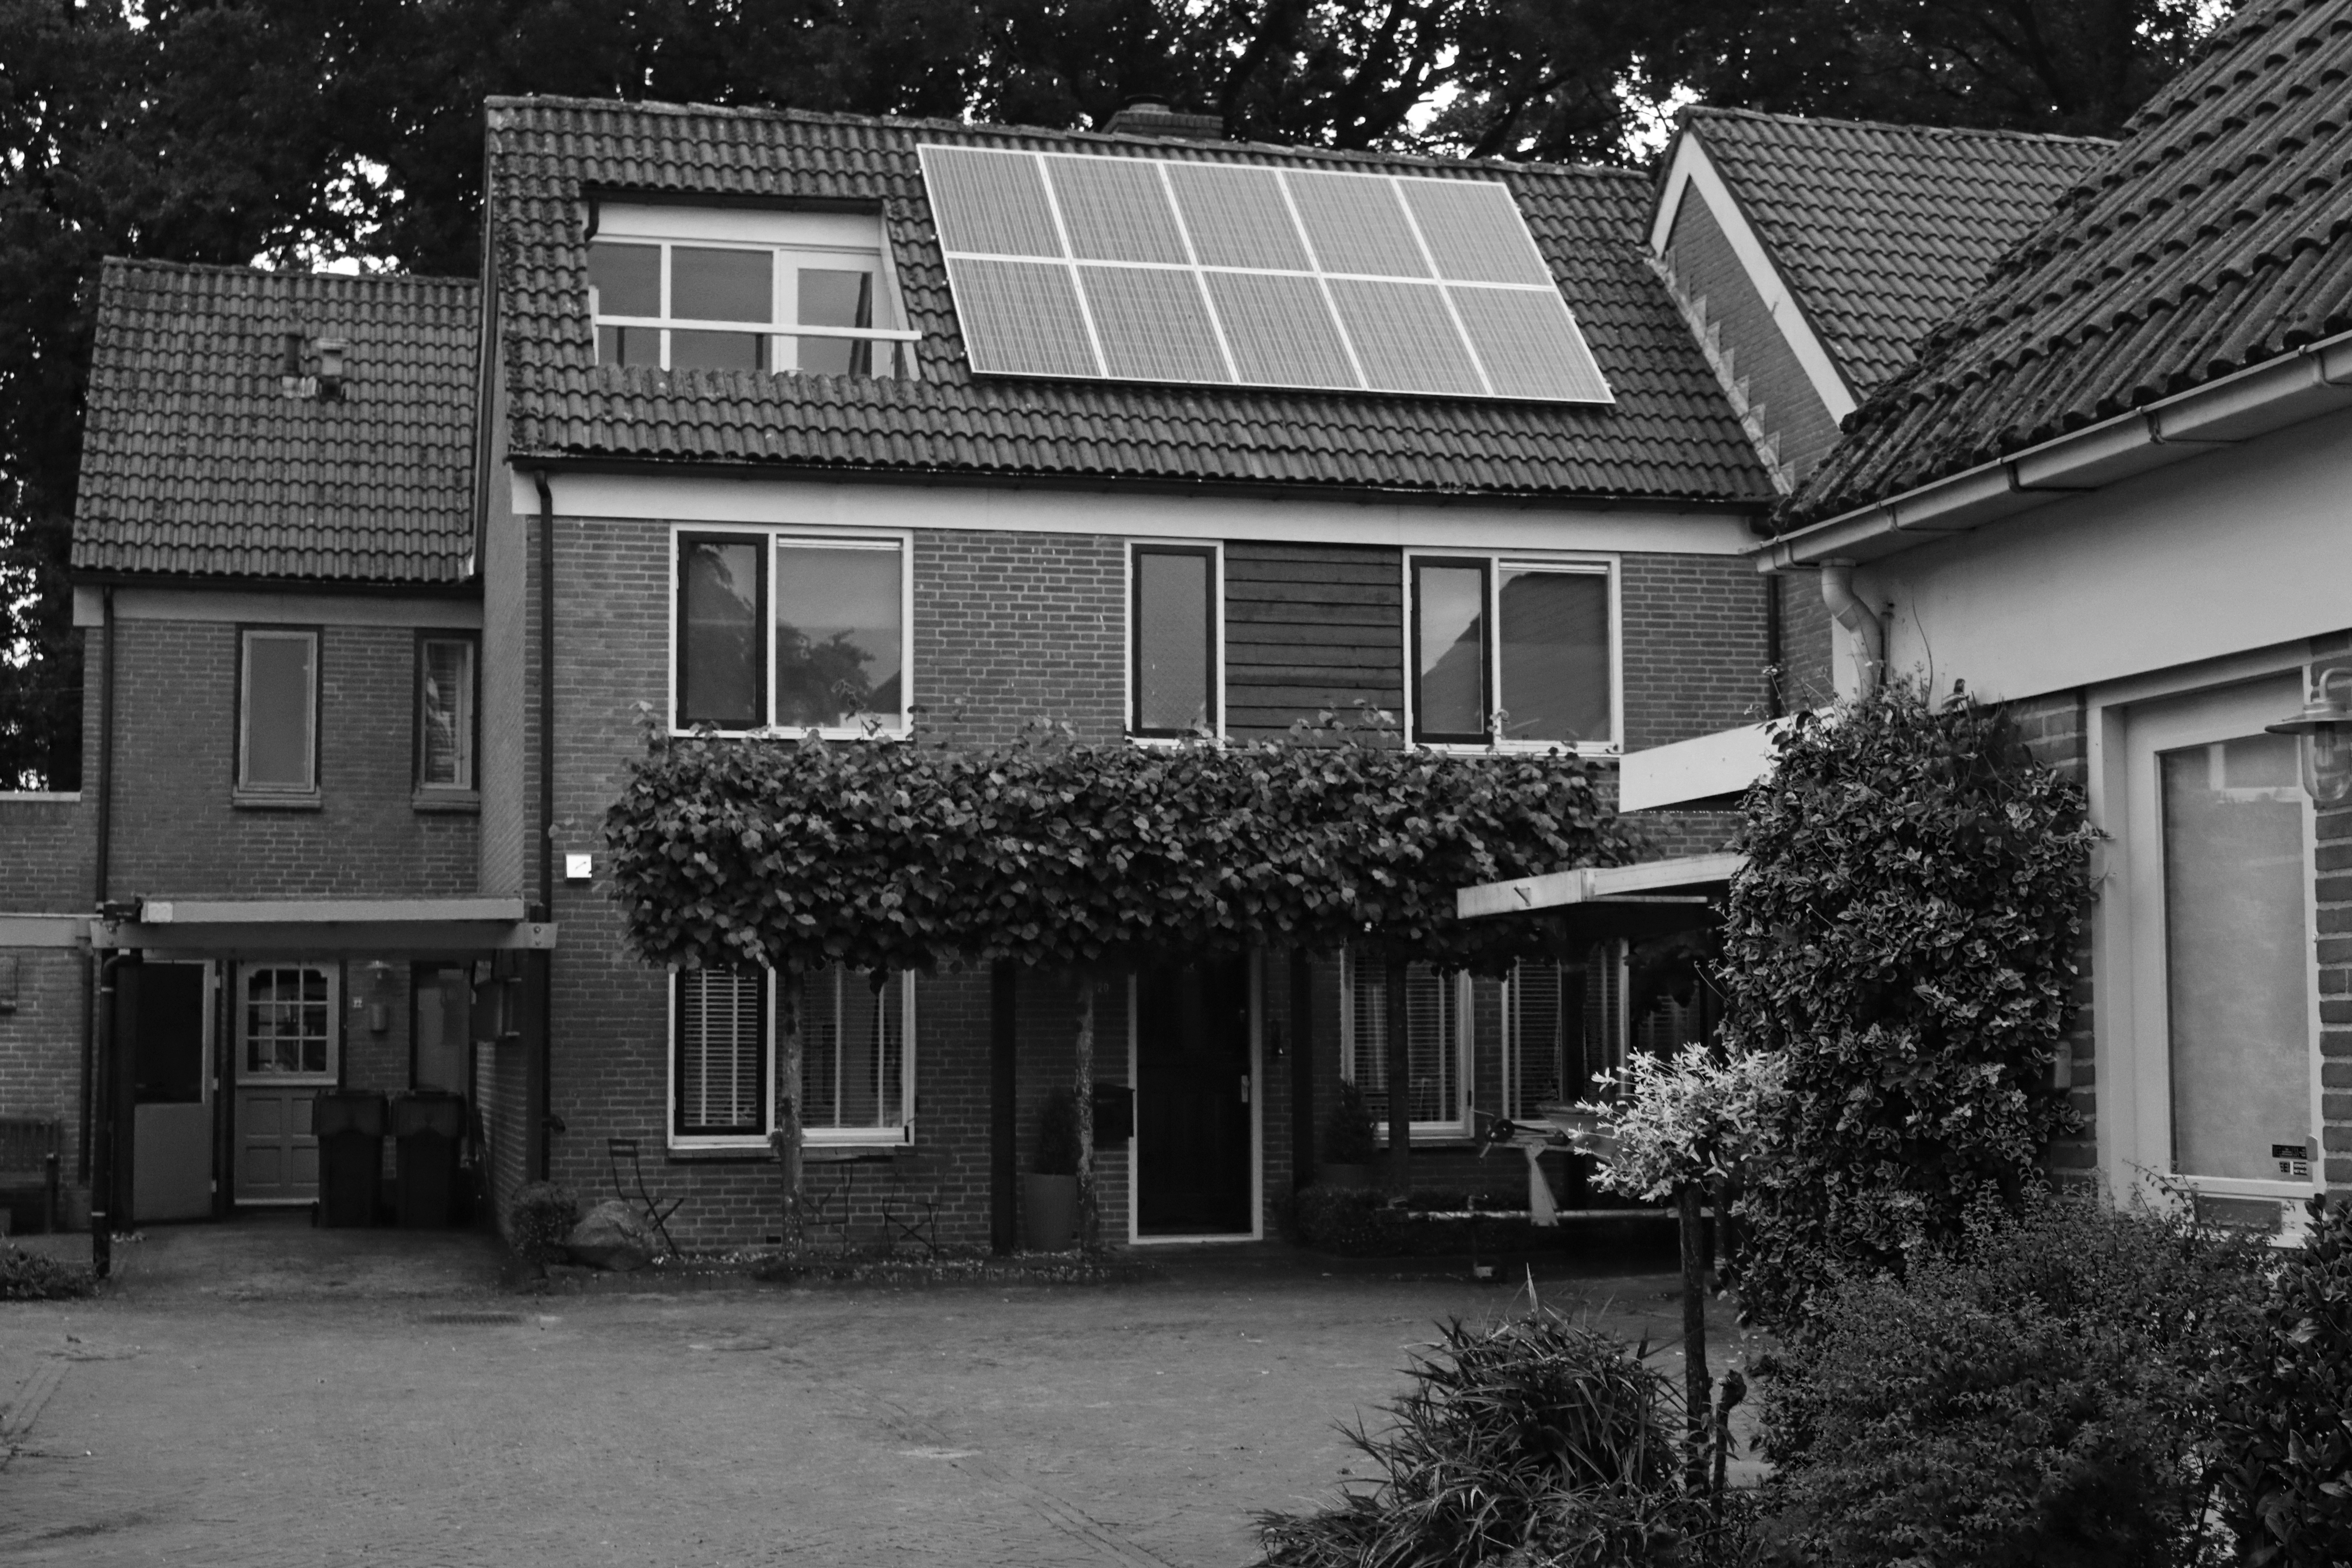 A house in Nunspeet, the Netherlands.